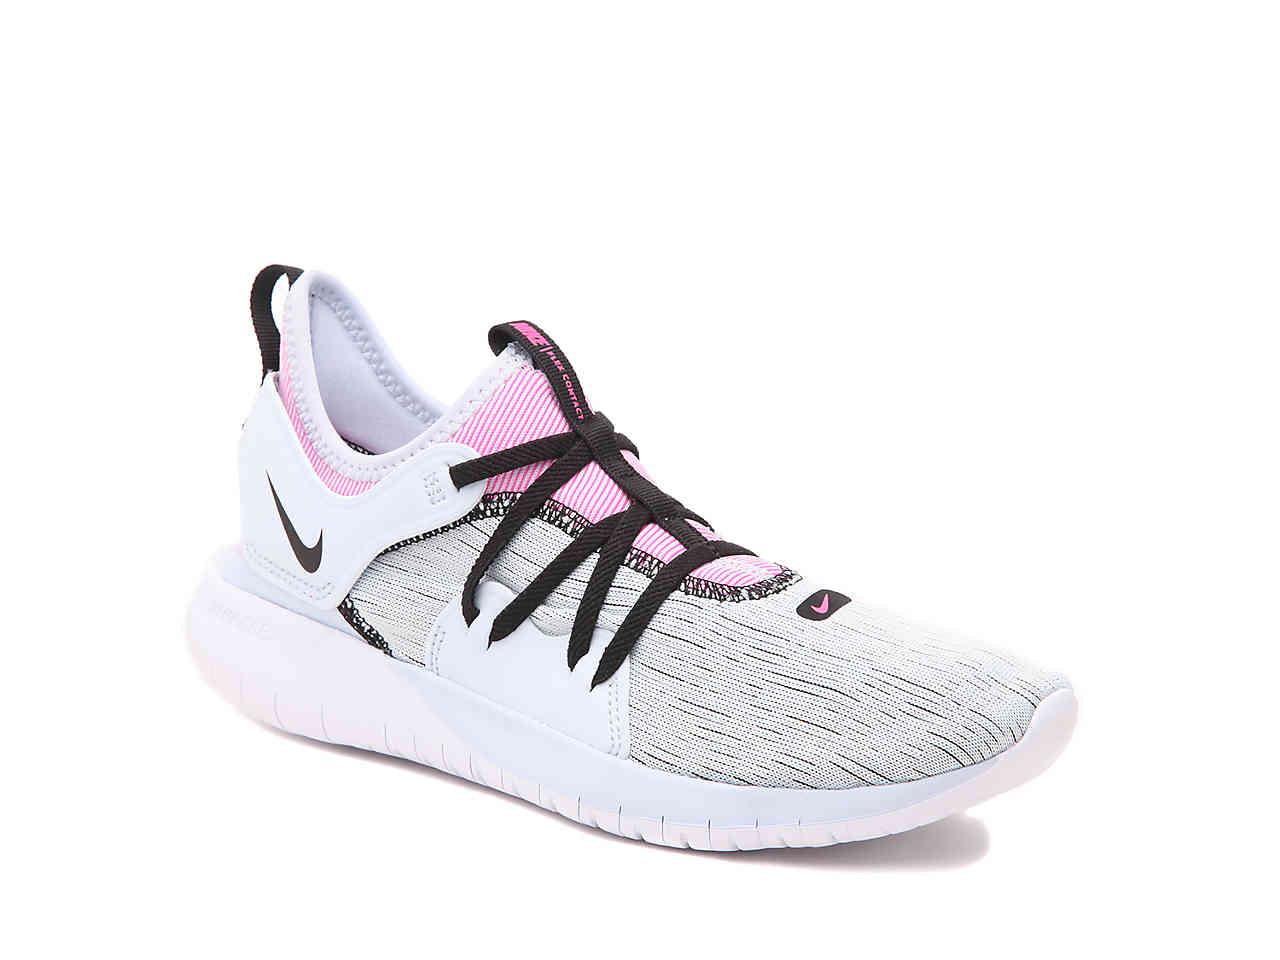 Slordig Verklaring Voetzool Nike Flex Contact 3 Running Shoes in Gray | Lyst